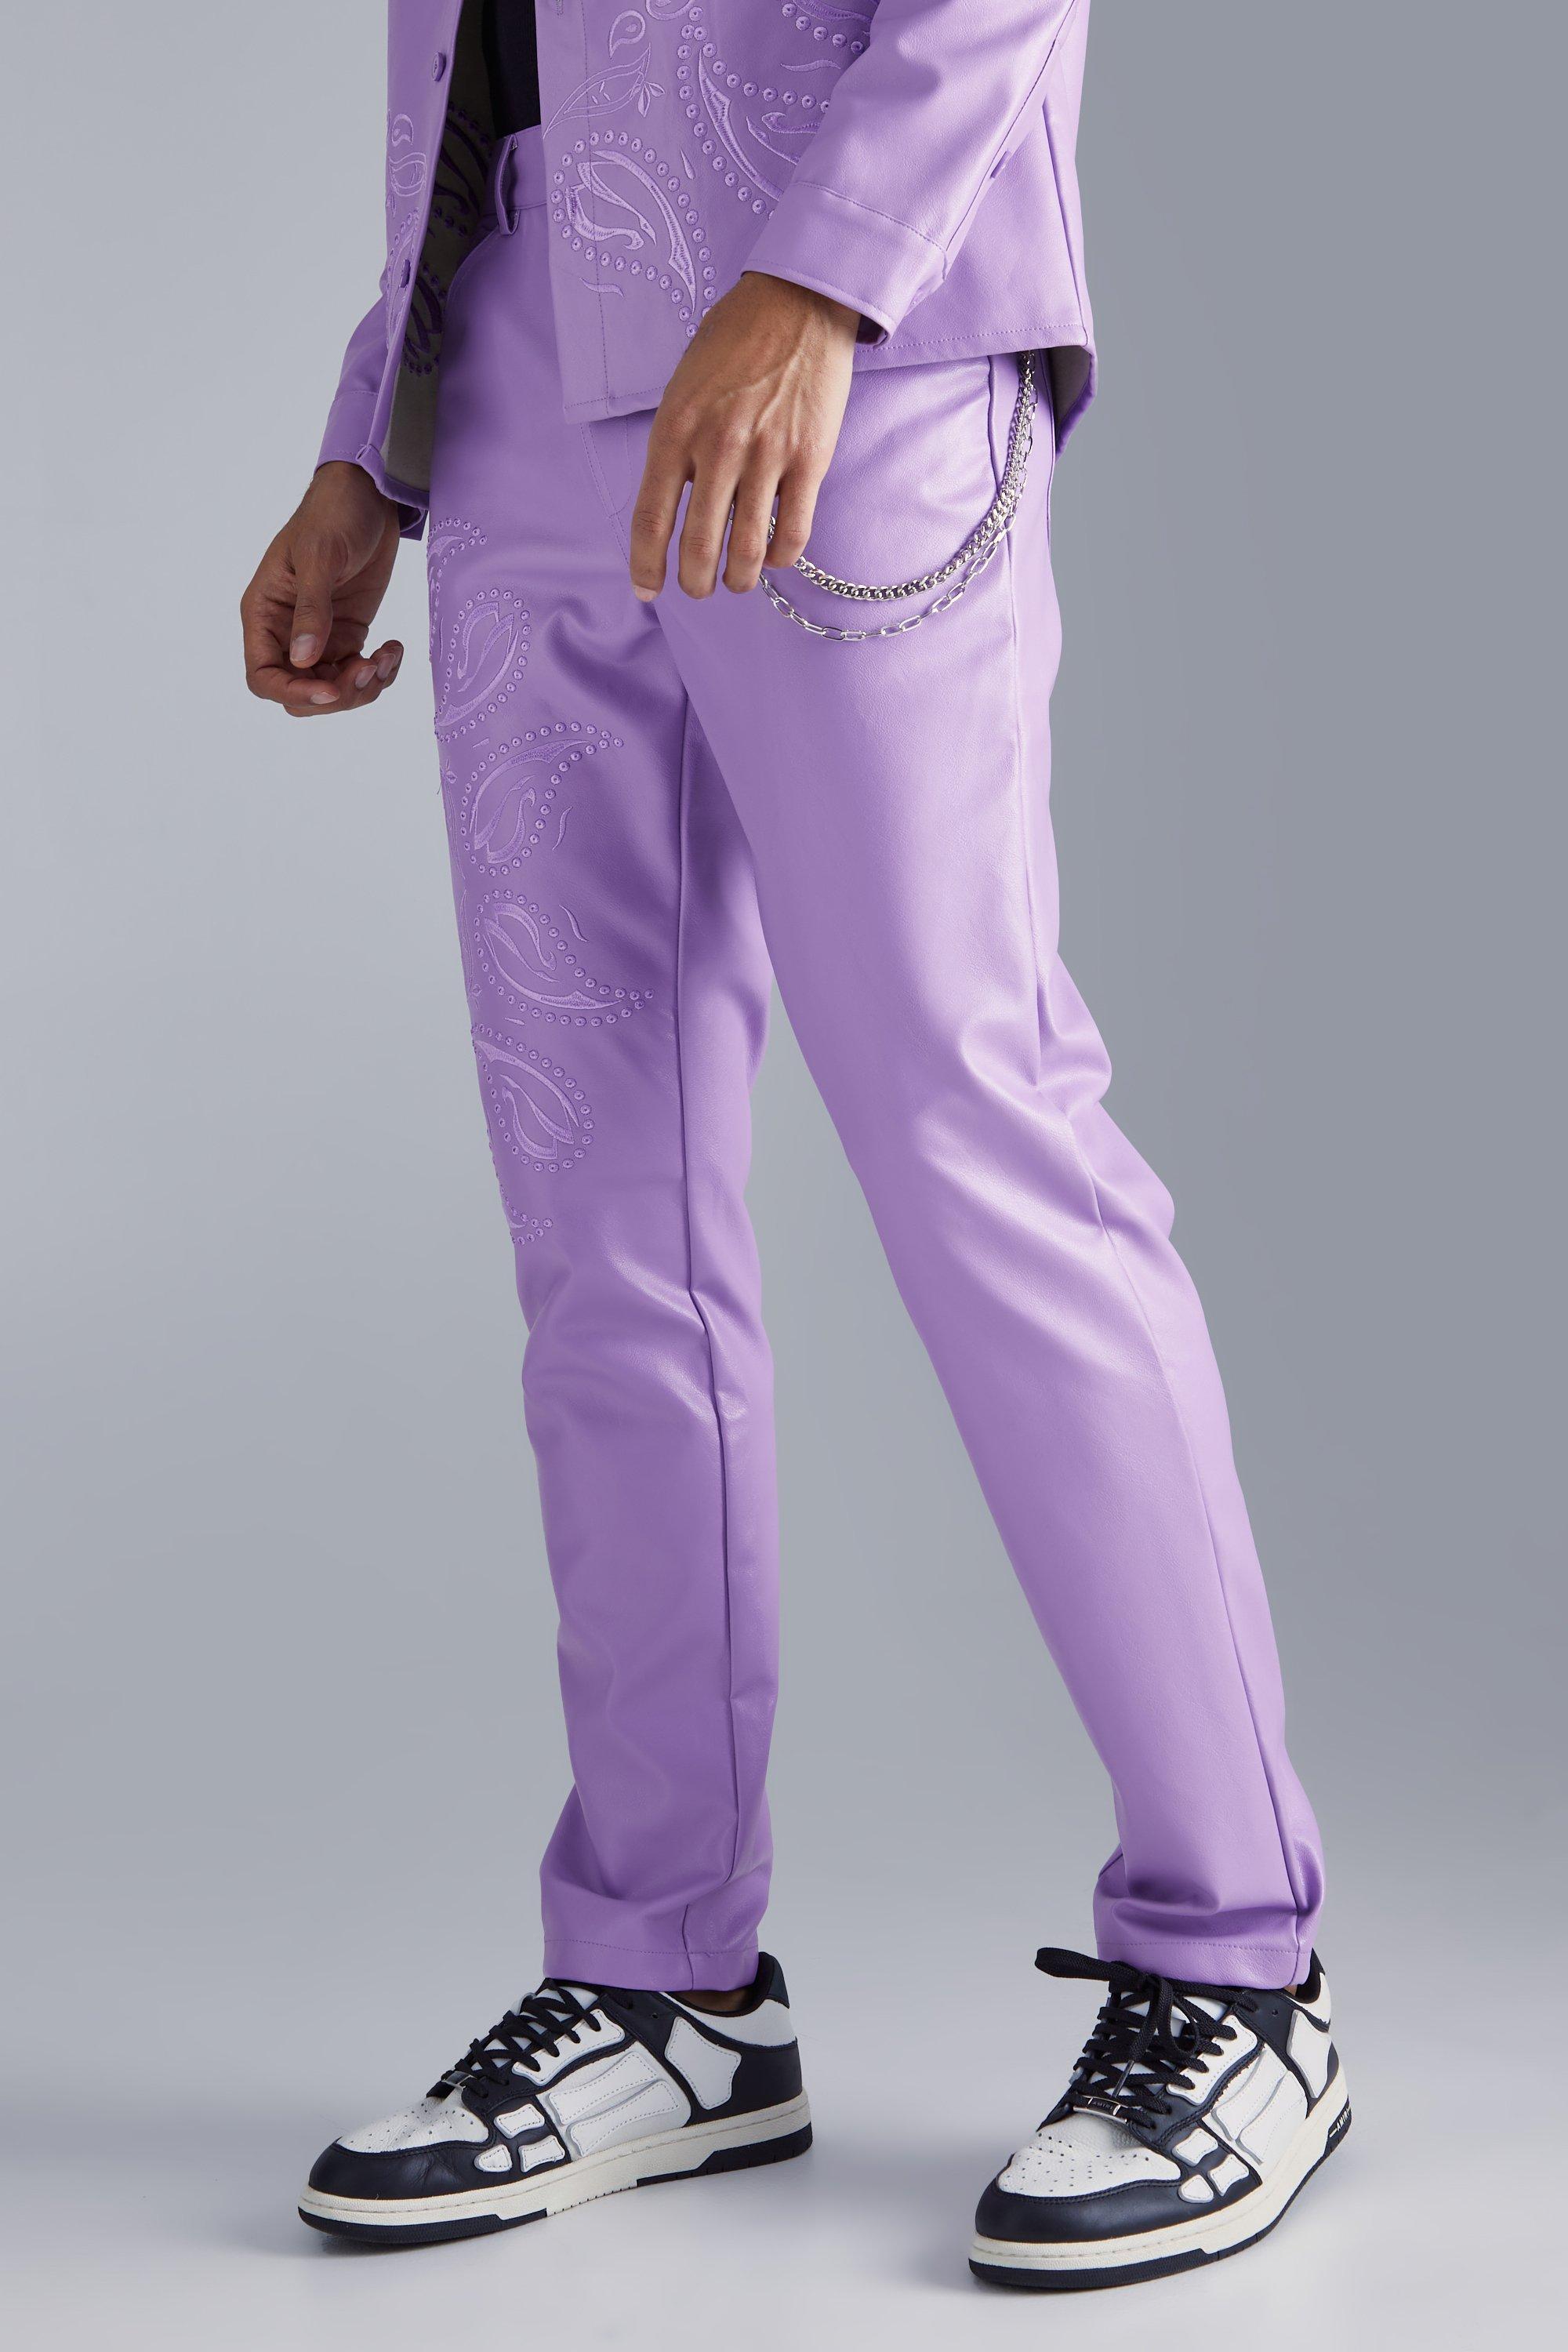 Image of Pantaloni Slim Fit in PU in fantasia cachemire con ricami, Purple